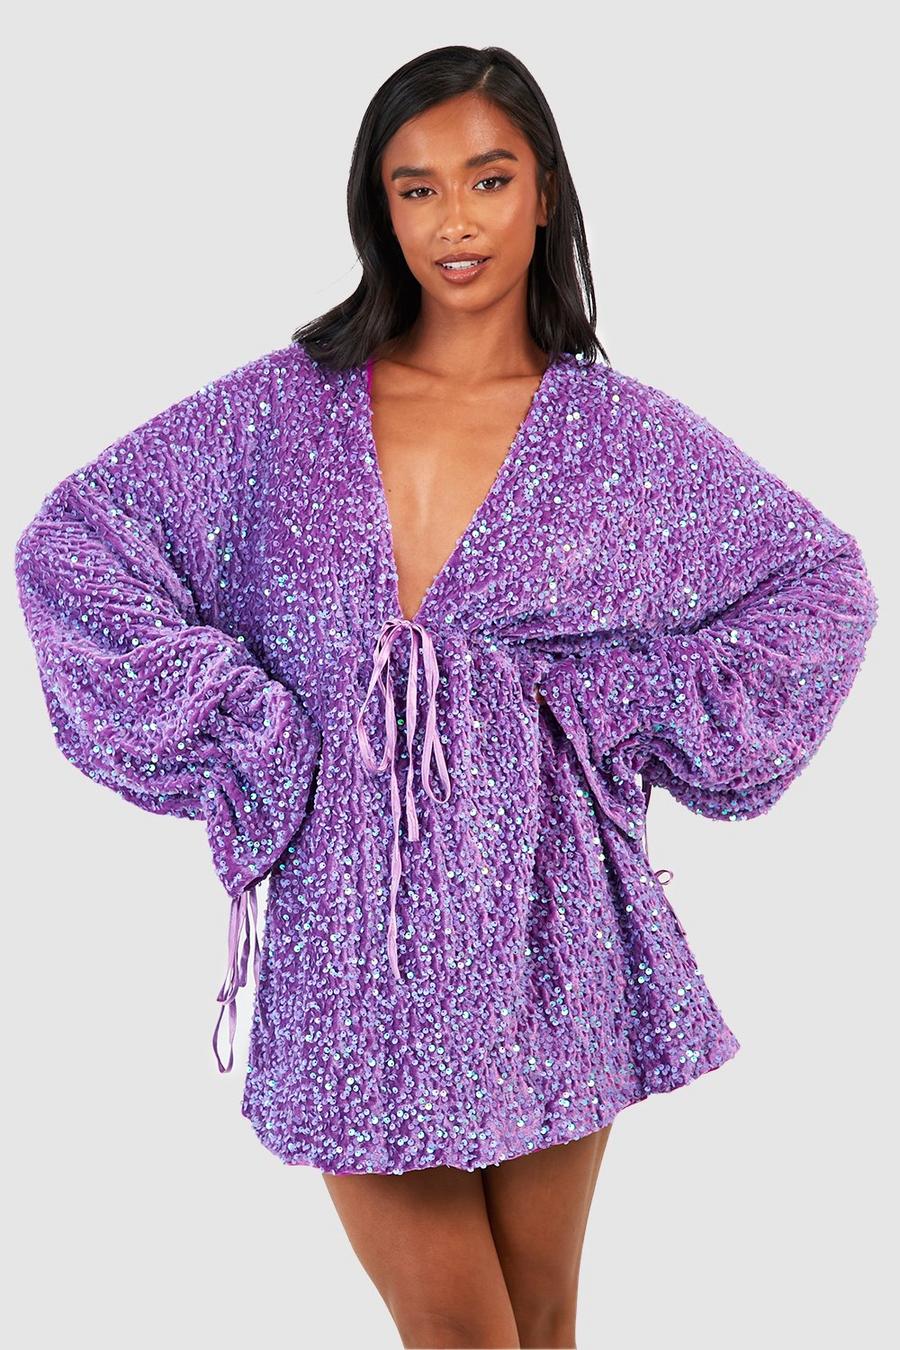 https://media.boohoo.com/i/boohoo/gzz68416_purple_xl/female-purple-petite-velvet-sequin-volume-sleeve-skater-dress/?w=900&qlt=default&fmt.jp2.qlt=70&fmt=auto&sm=fit